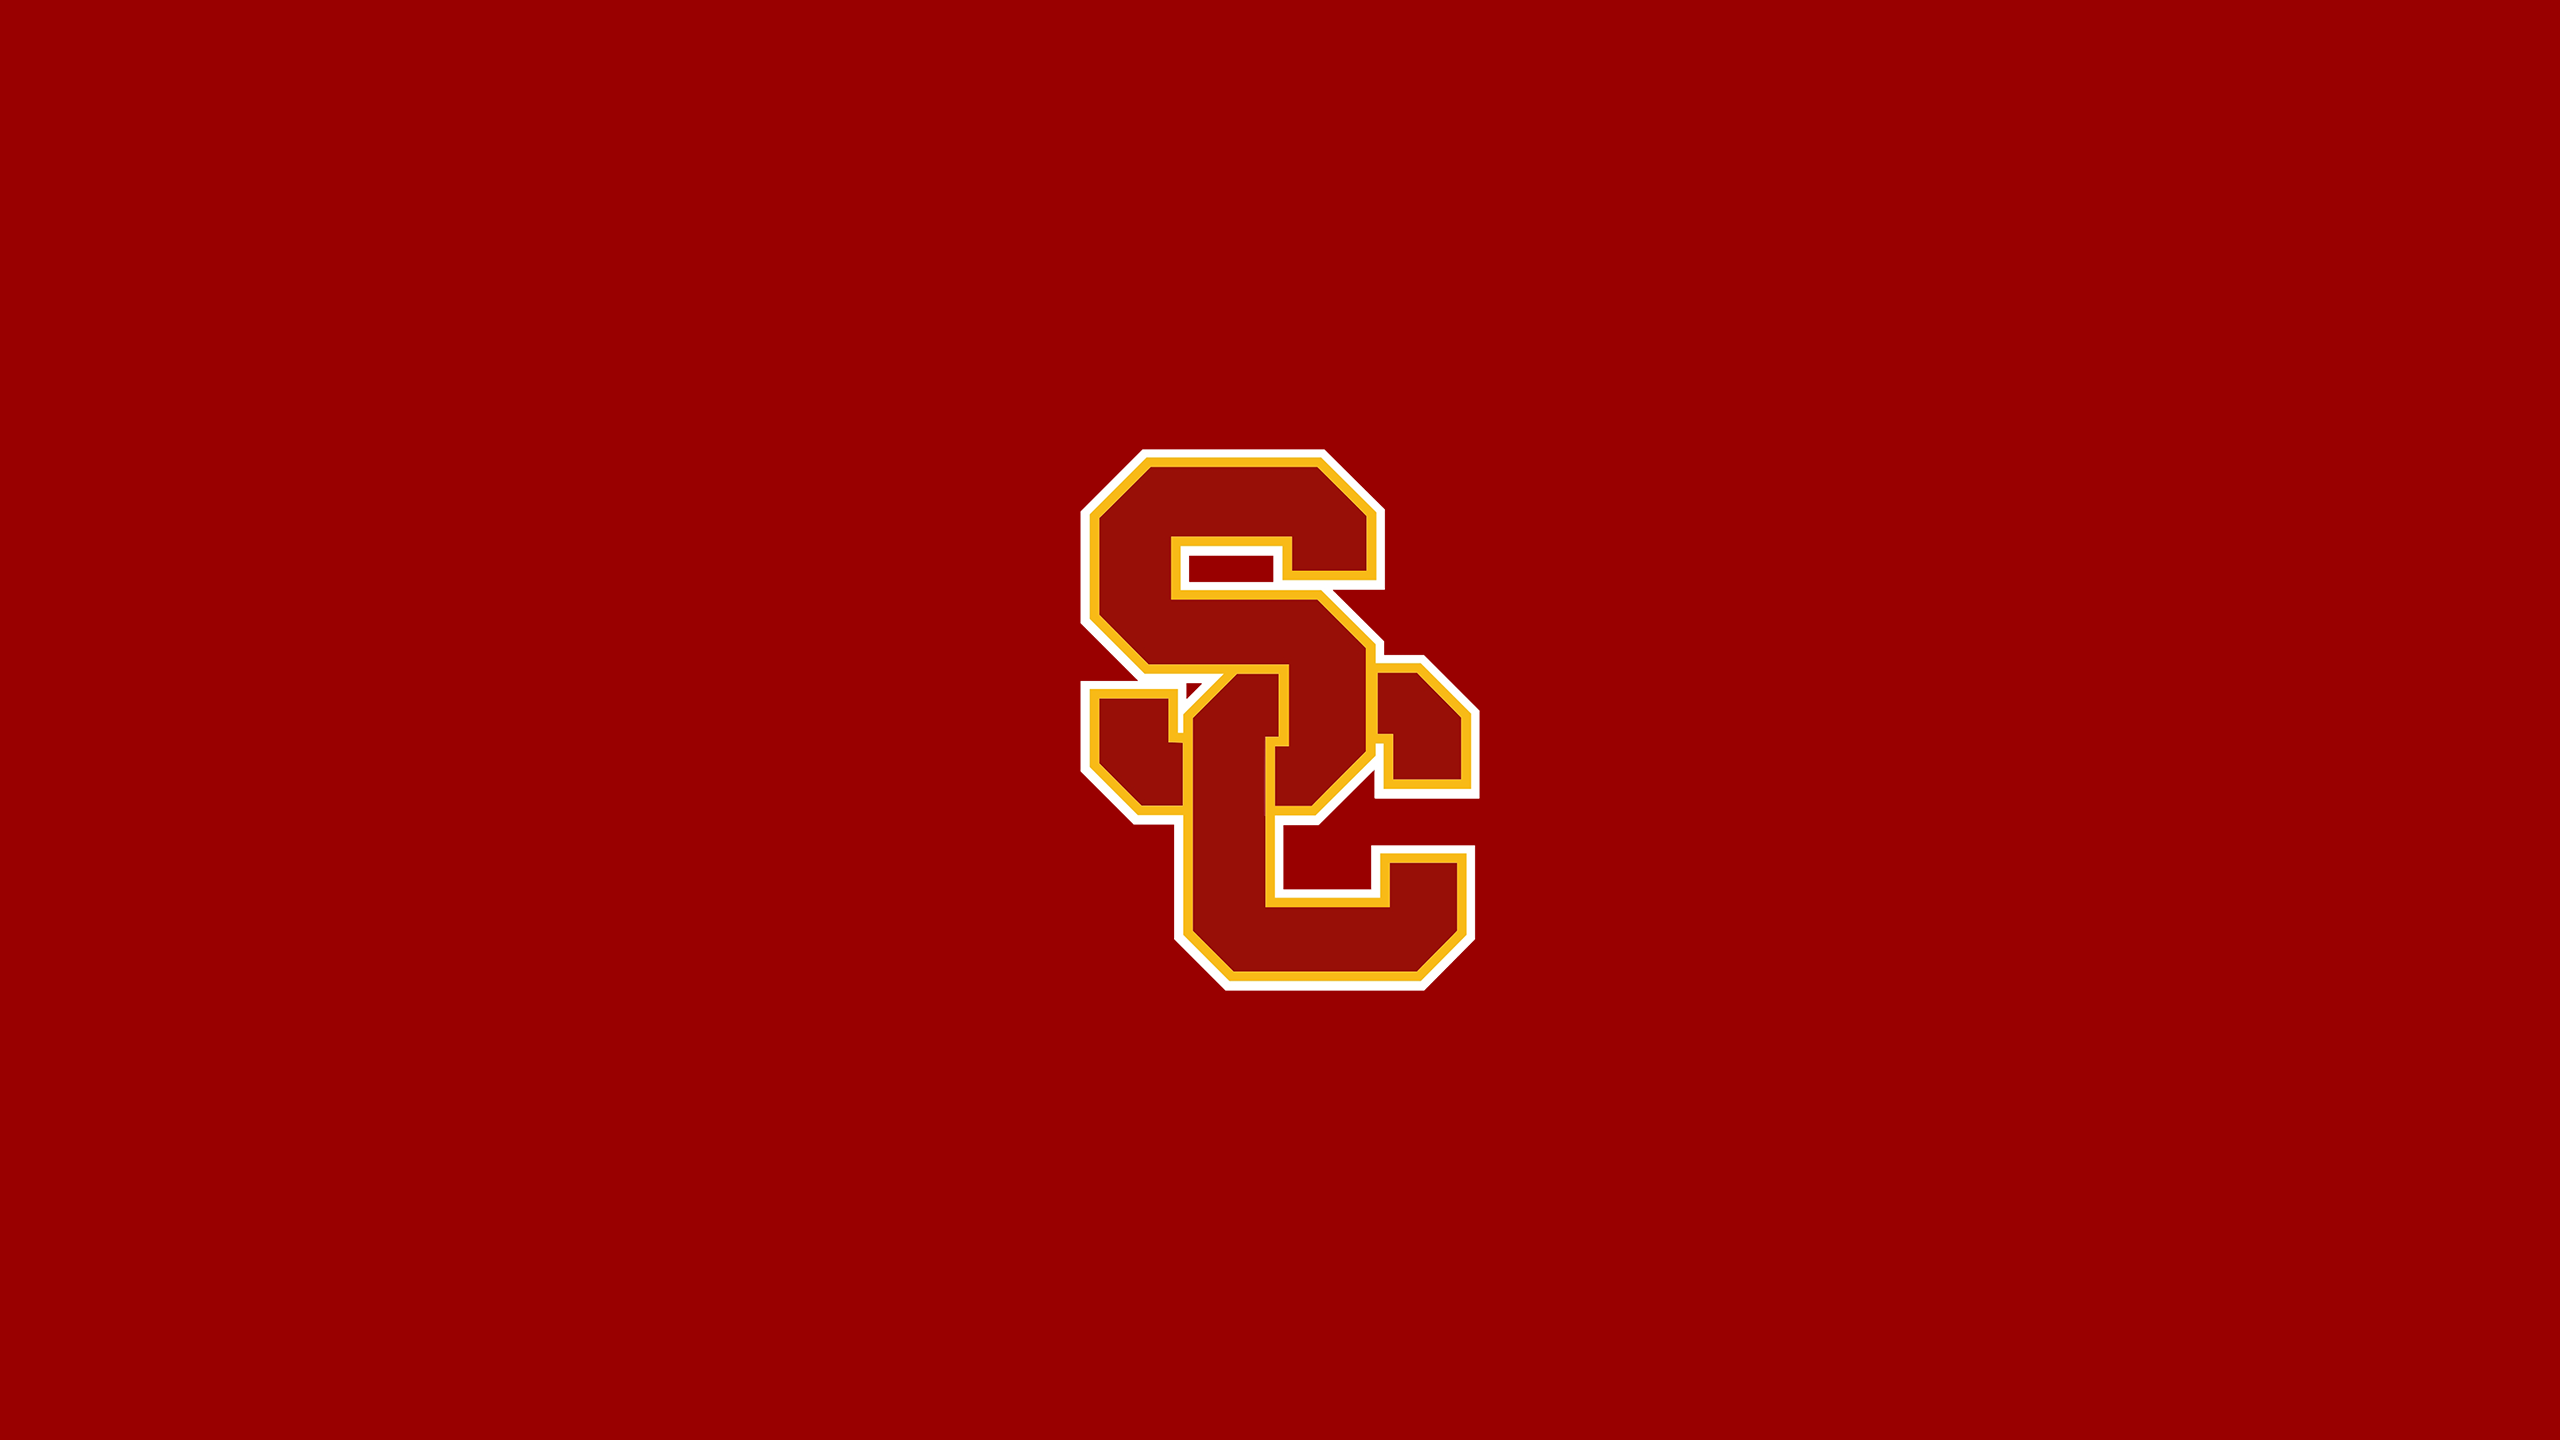 USC Trojans Basketball - NCAAB - Square Bettor